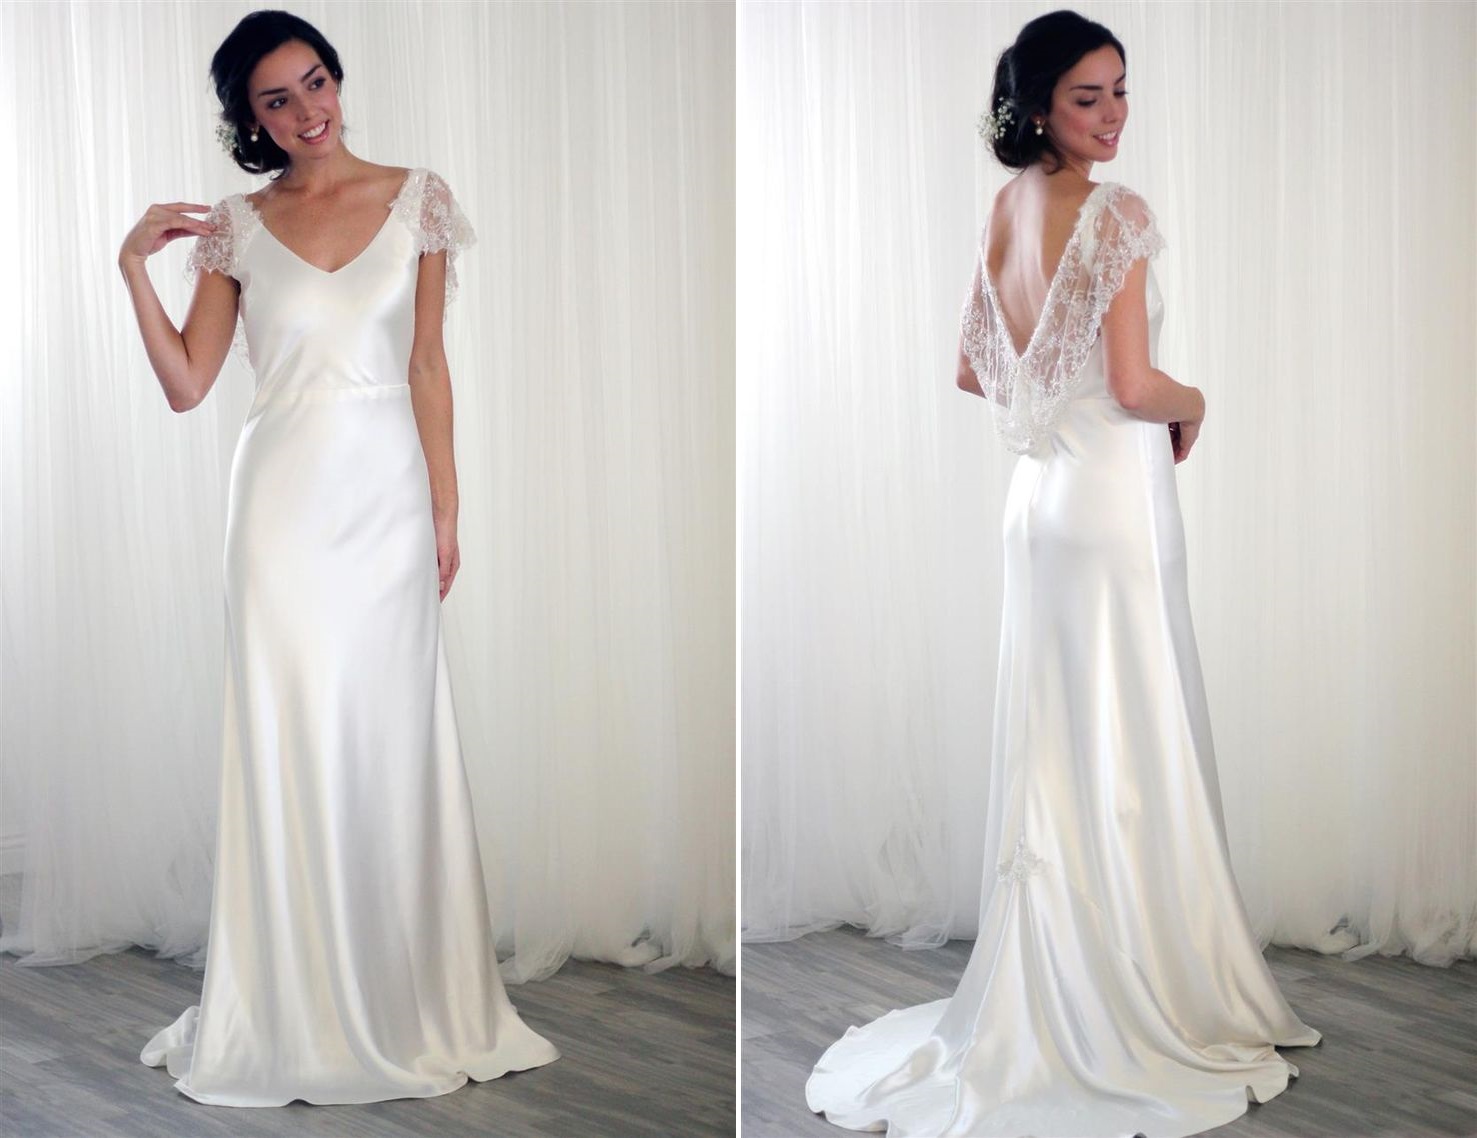 20 Breathtaking Art Deco Wedding Dresses